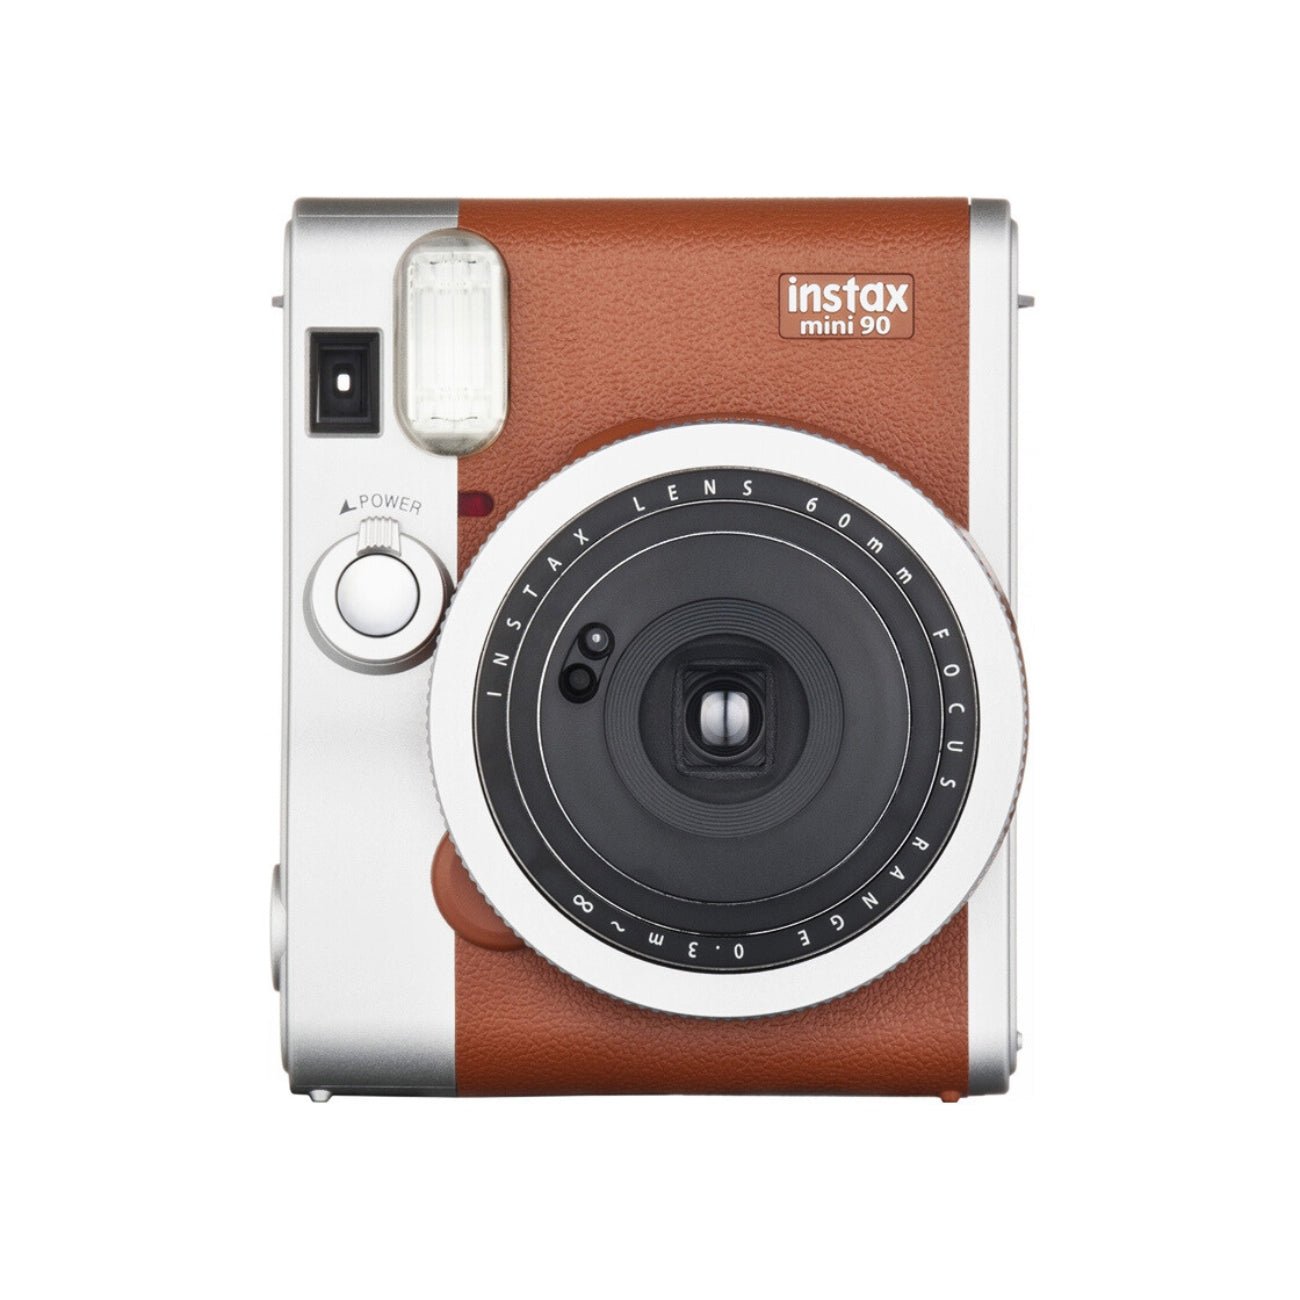 Fujifilm Instax Mini 90 Neo Classic Instant Film Camera (Brown)